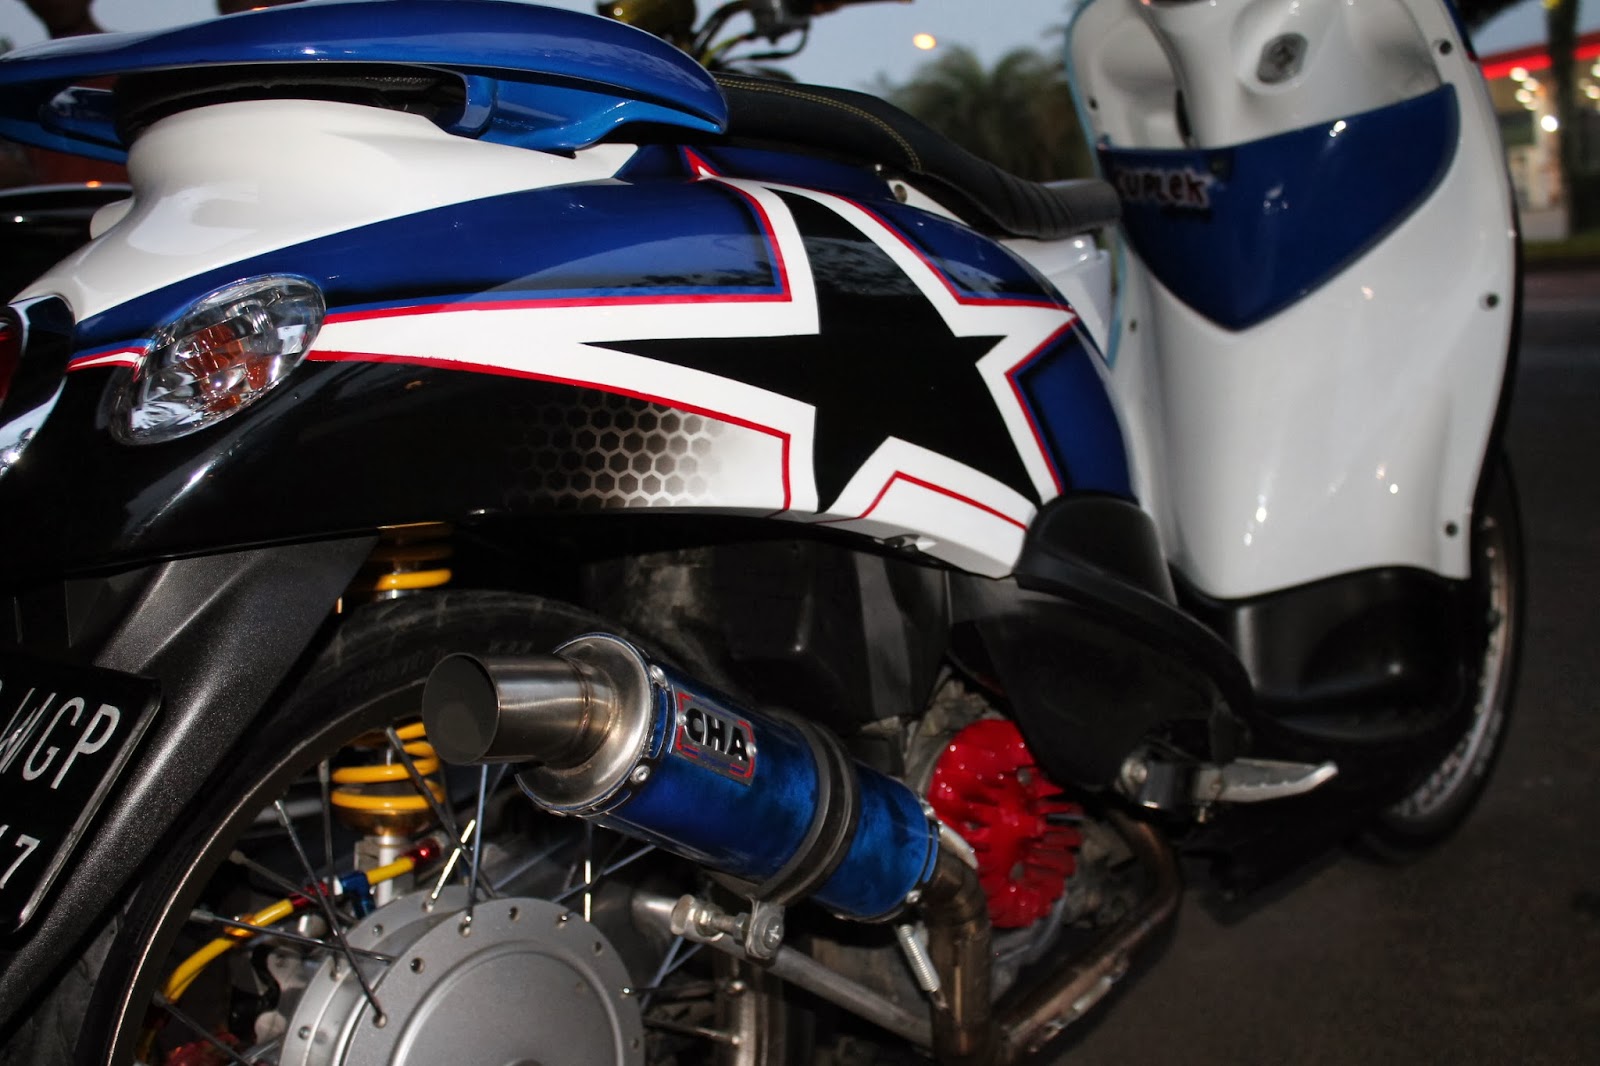 87 Modifikasi Motor Yamaha Mio Fino Sporty Terlengkap Kinyis Motor